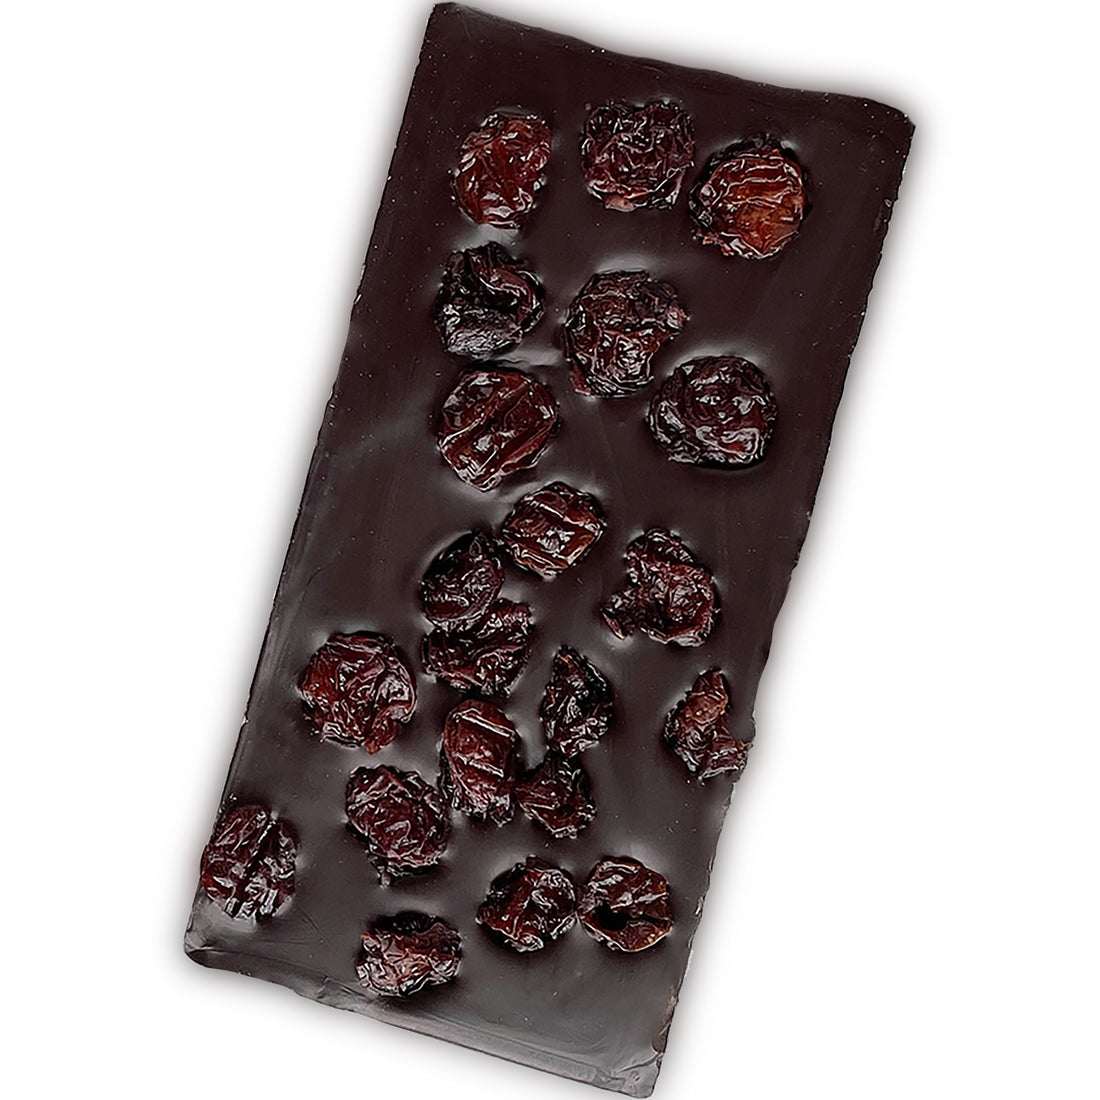 LEDGES Door County Cherry Chocolate Bar